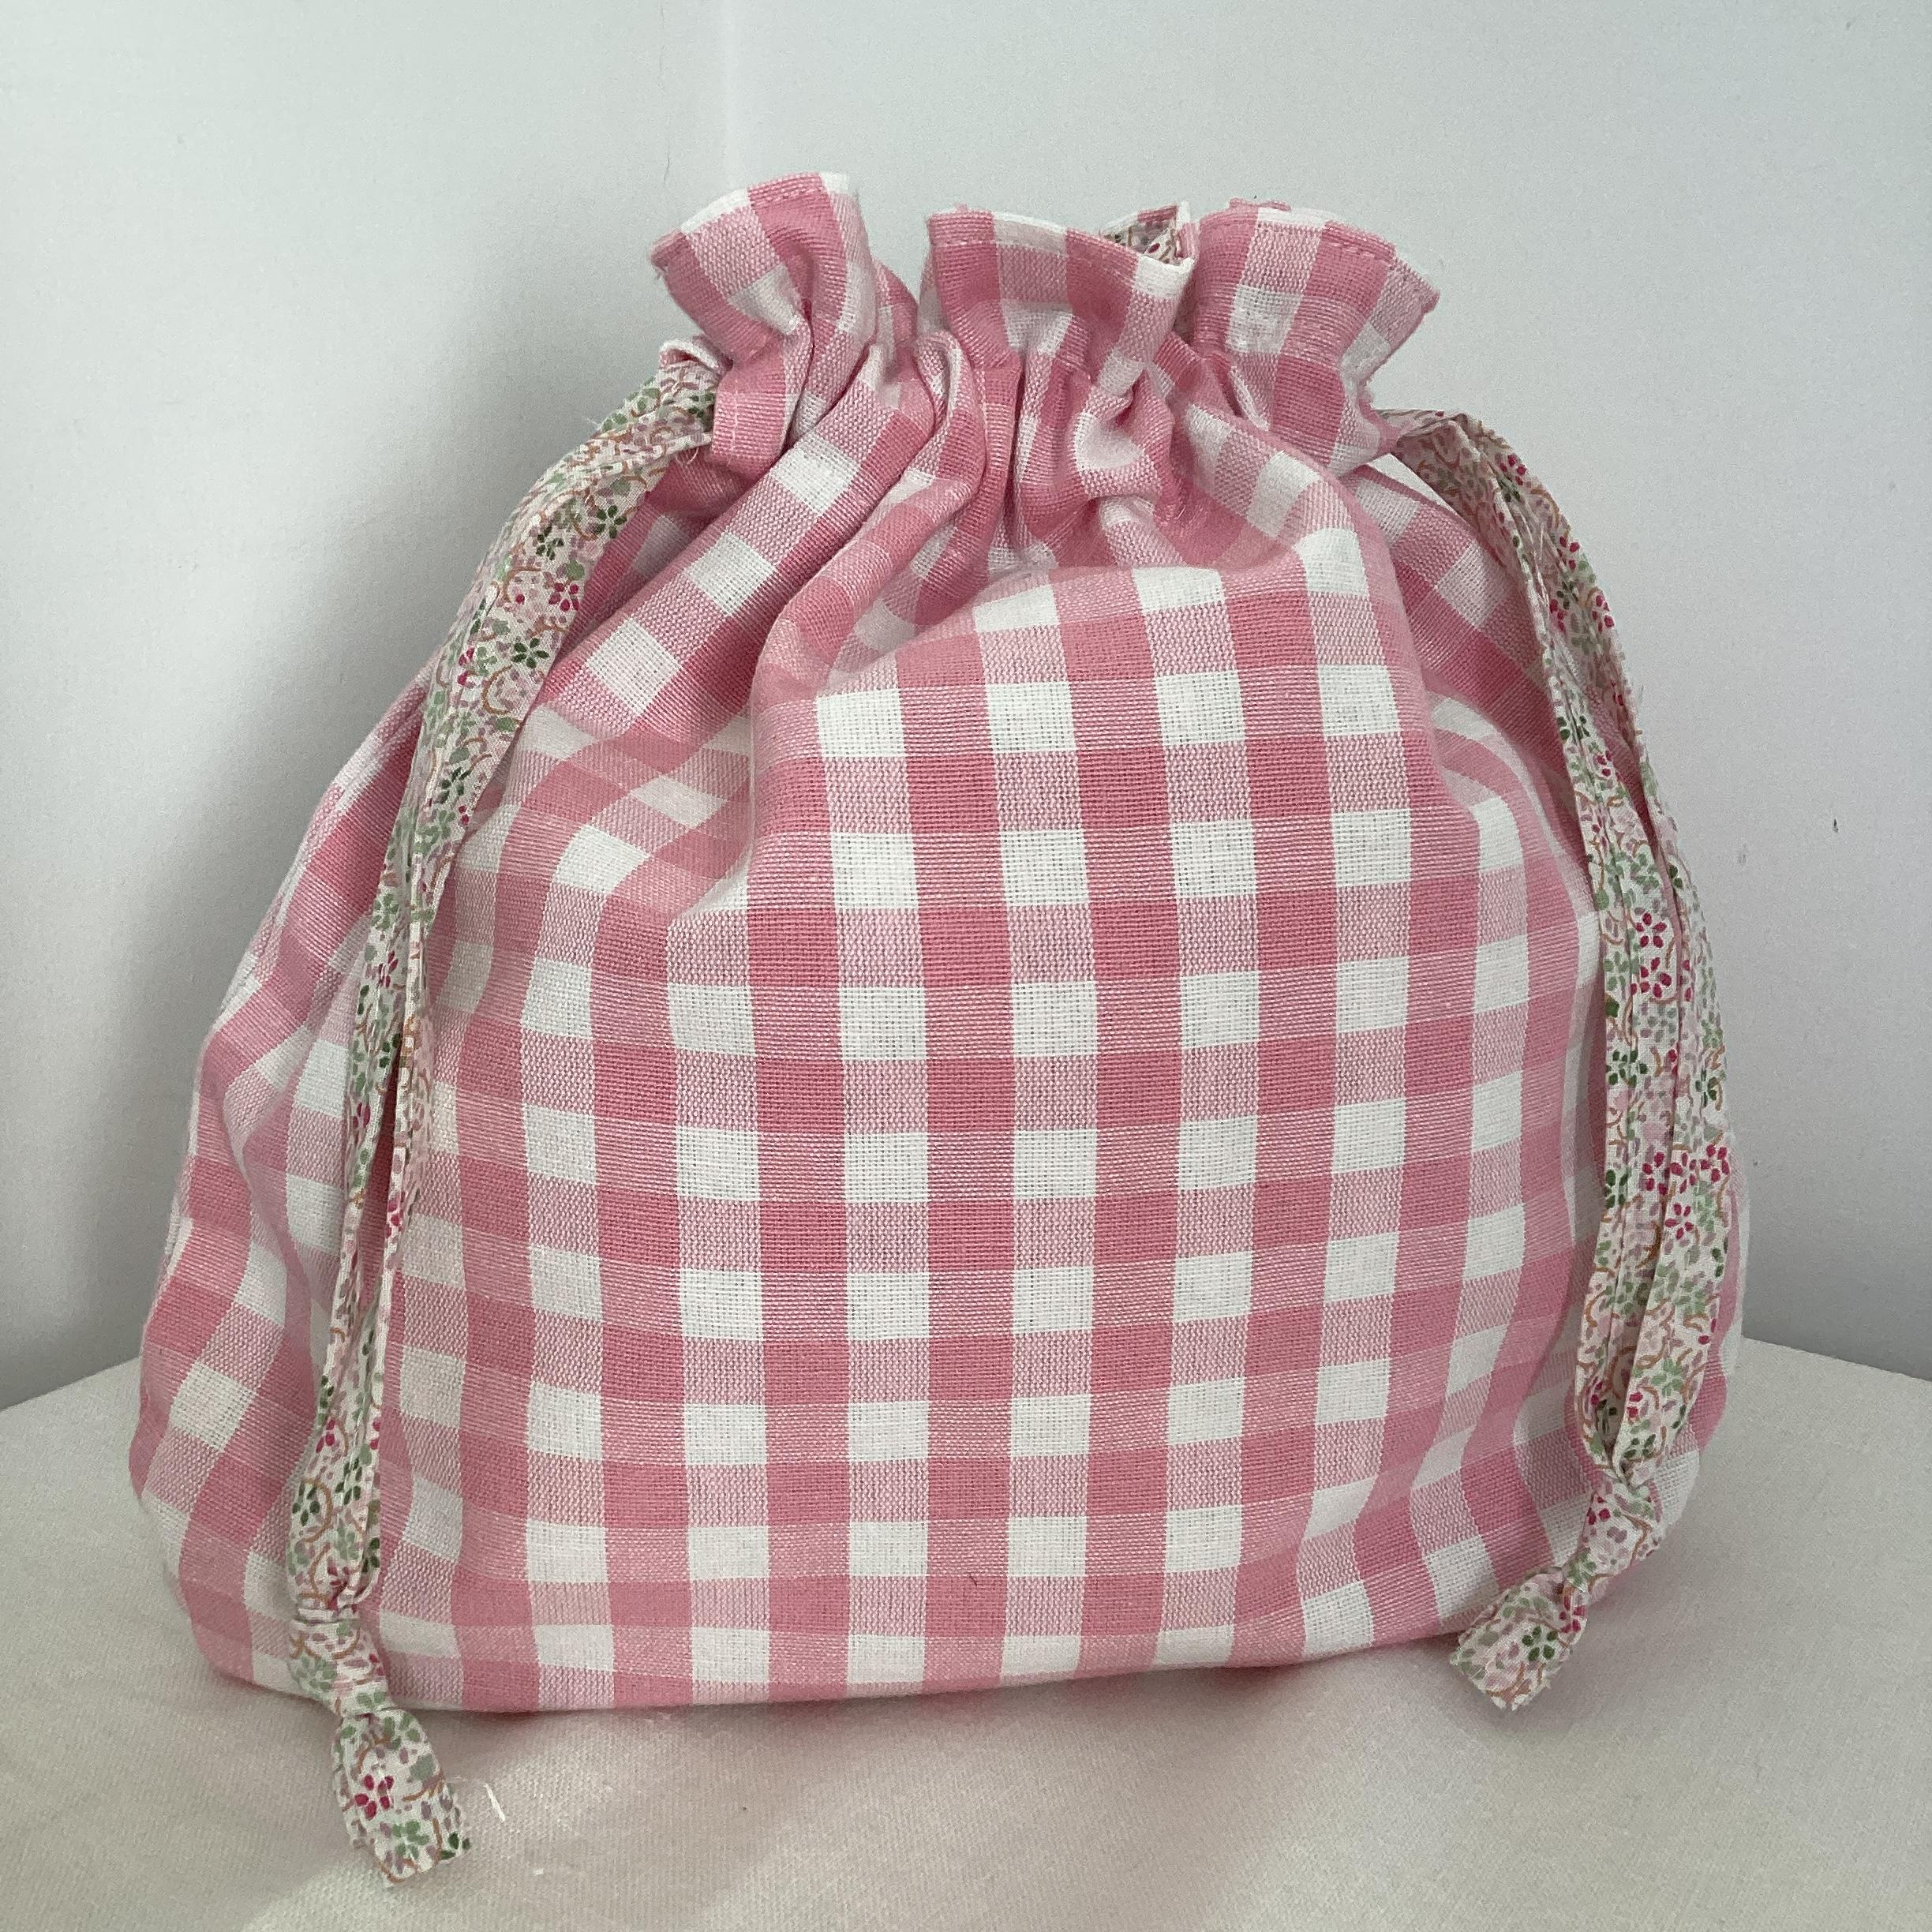 Drawstring Bag - pink and white check